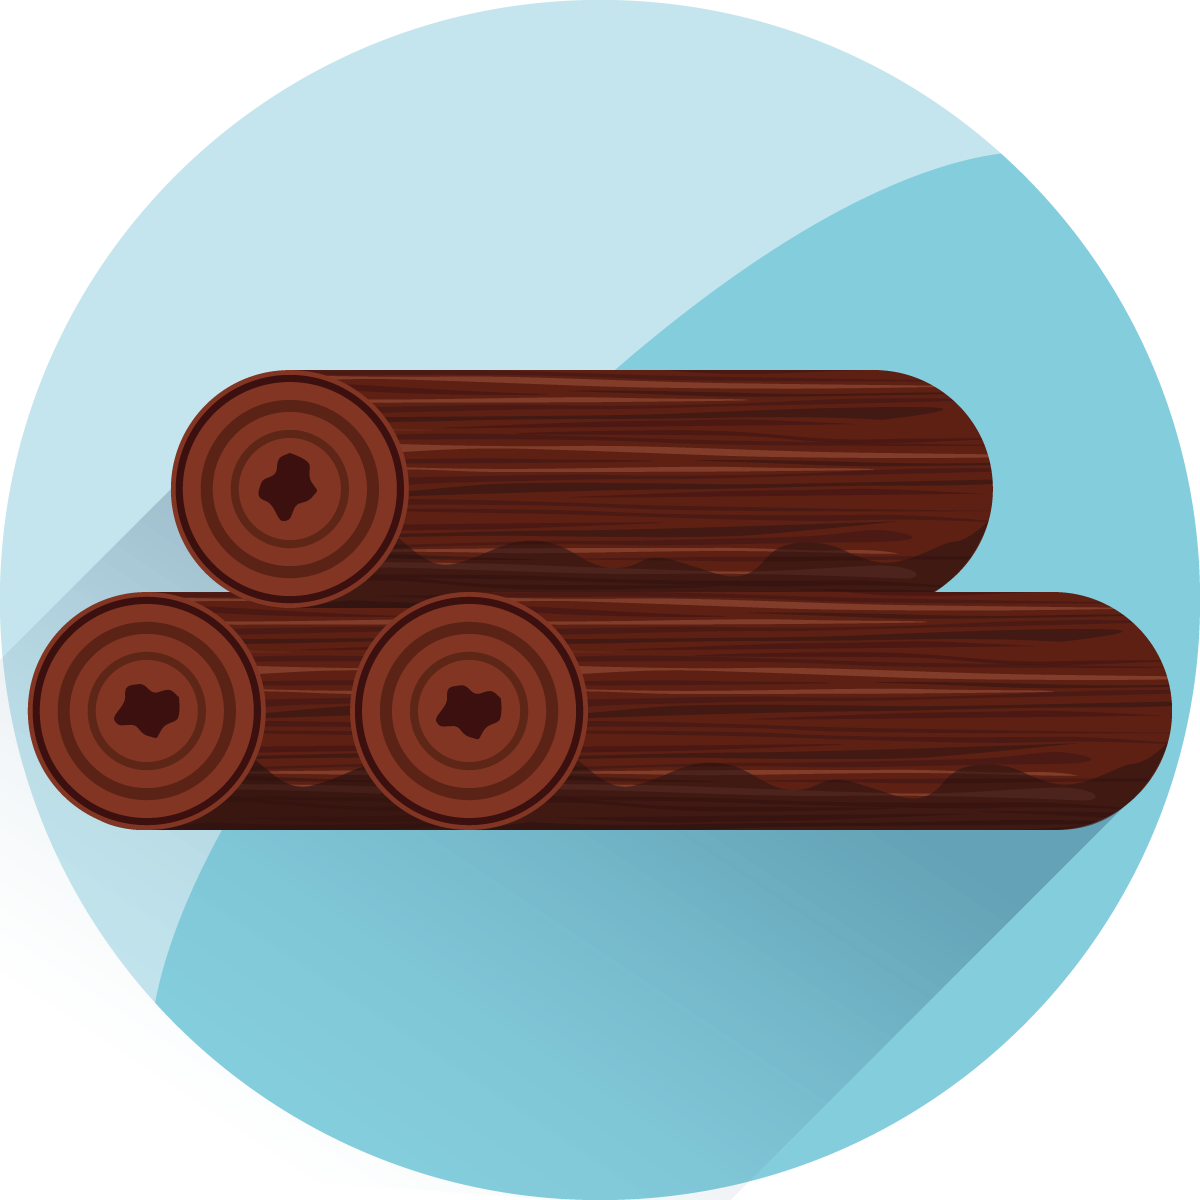 Mahagoni Holz